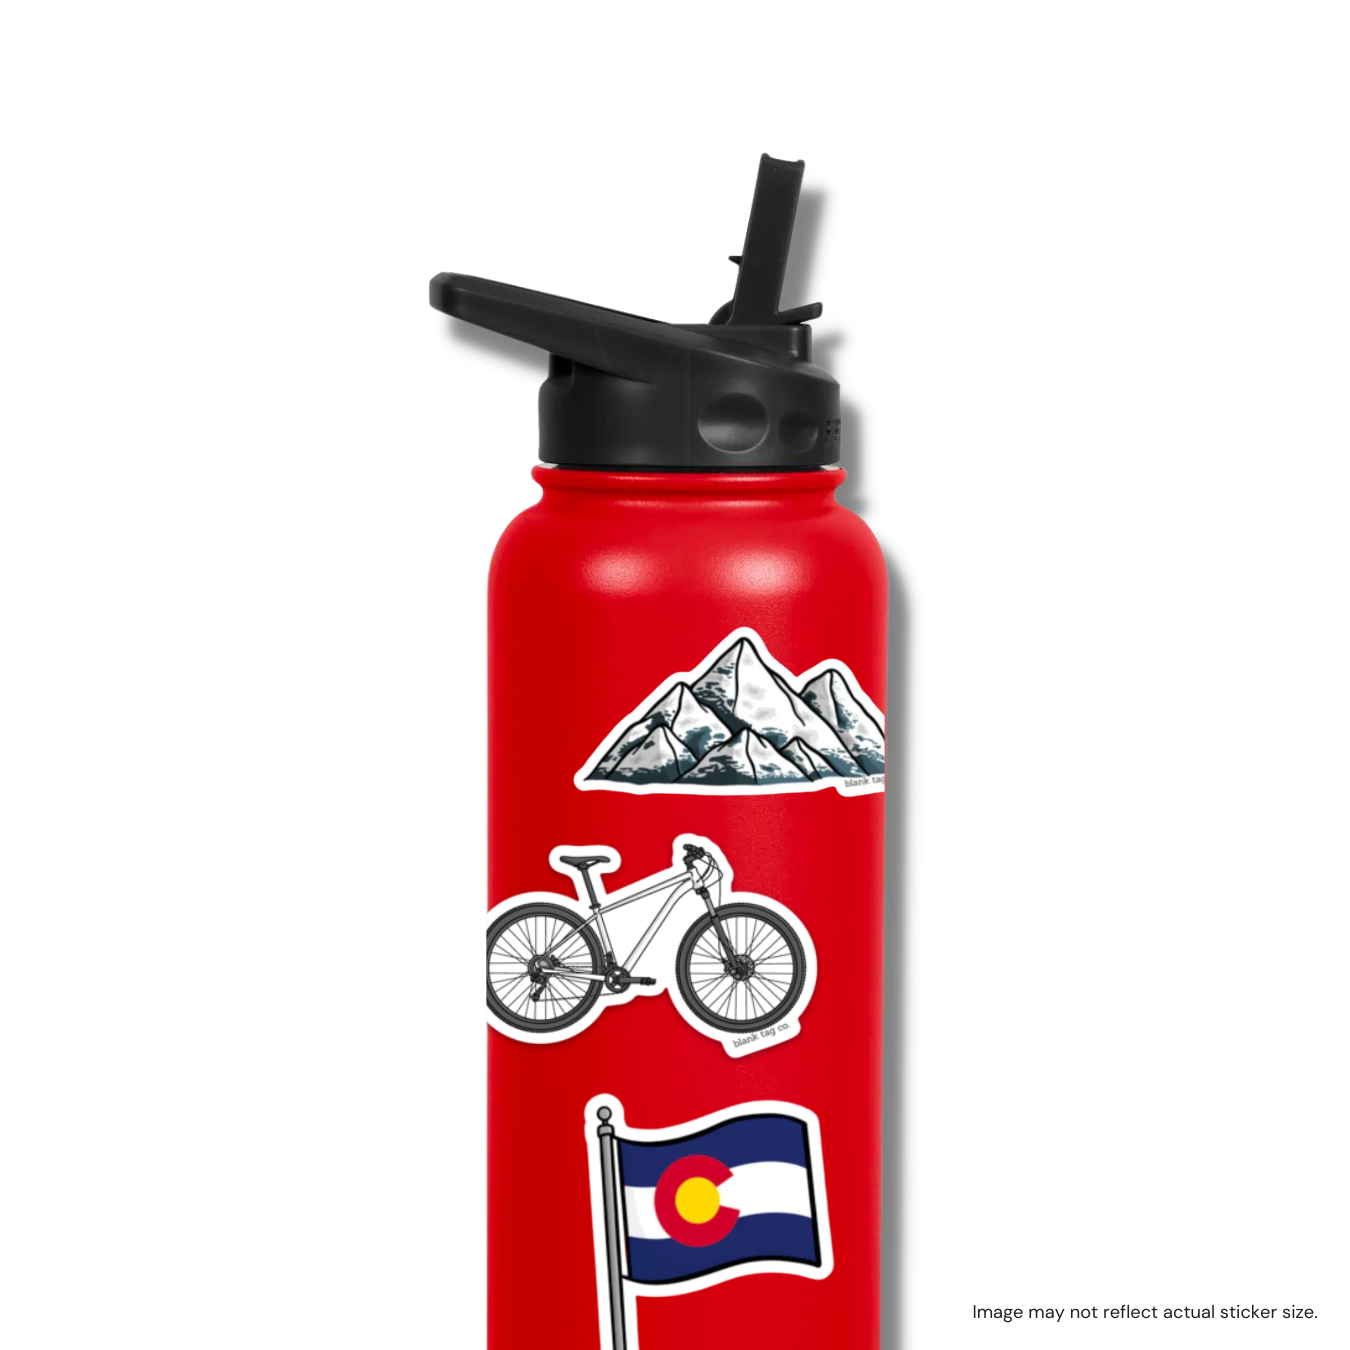 The Mountain Bike Sticker